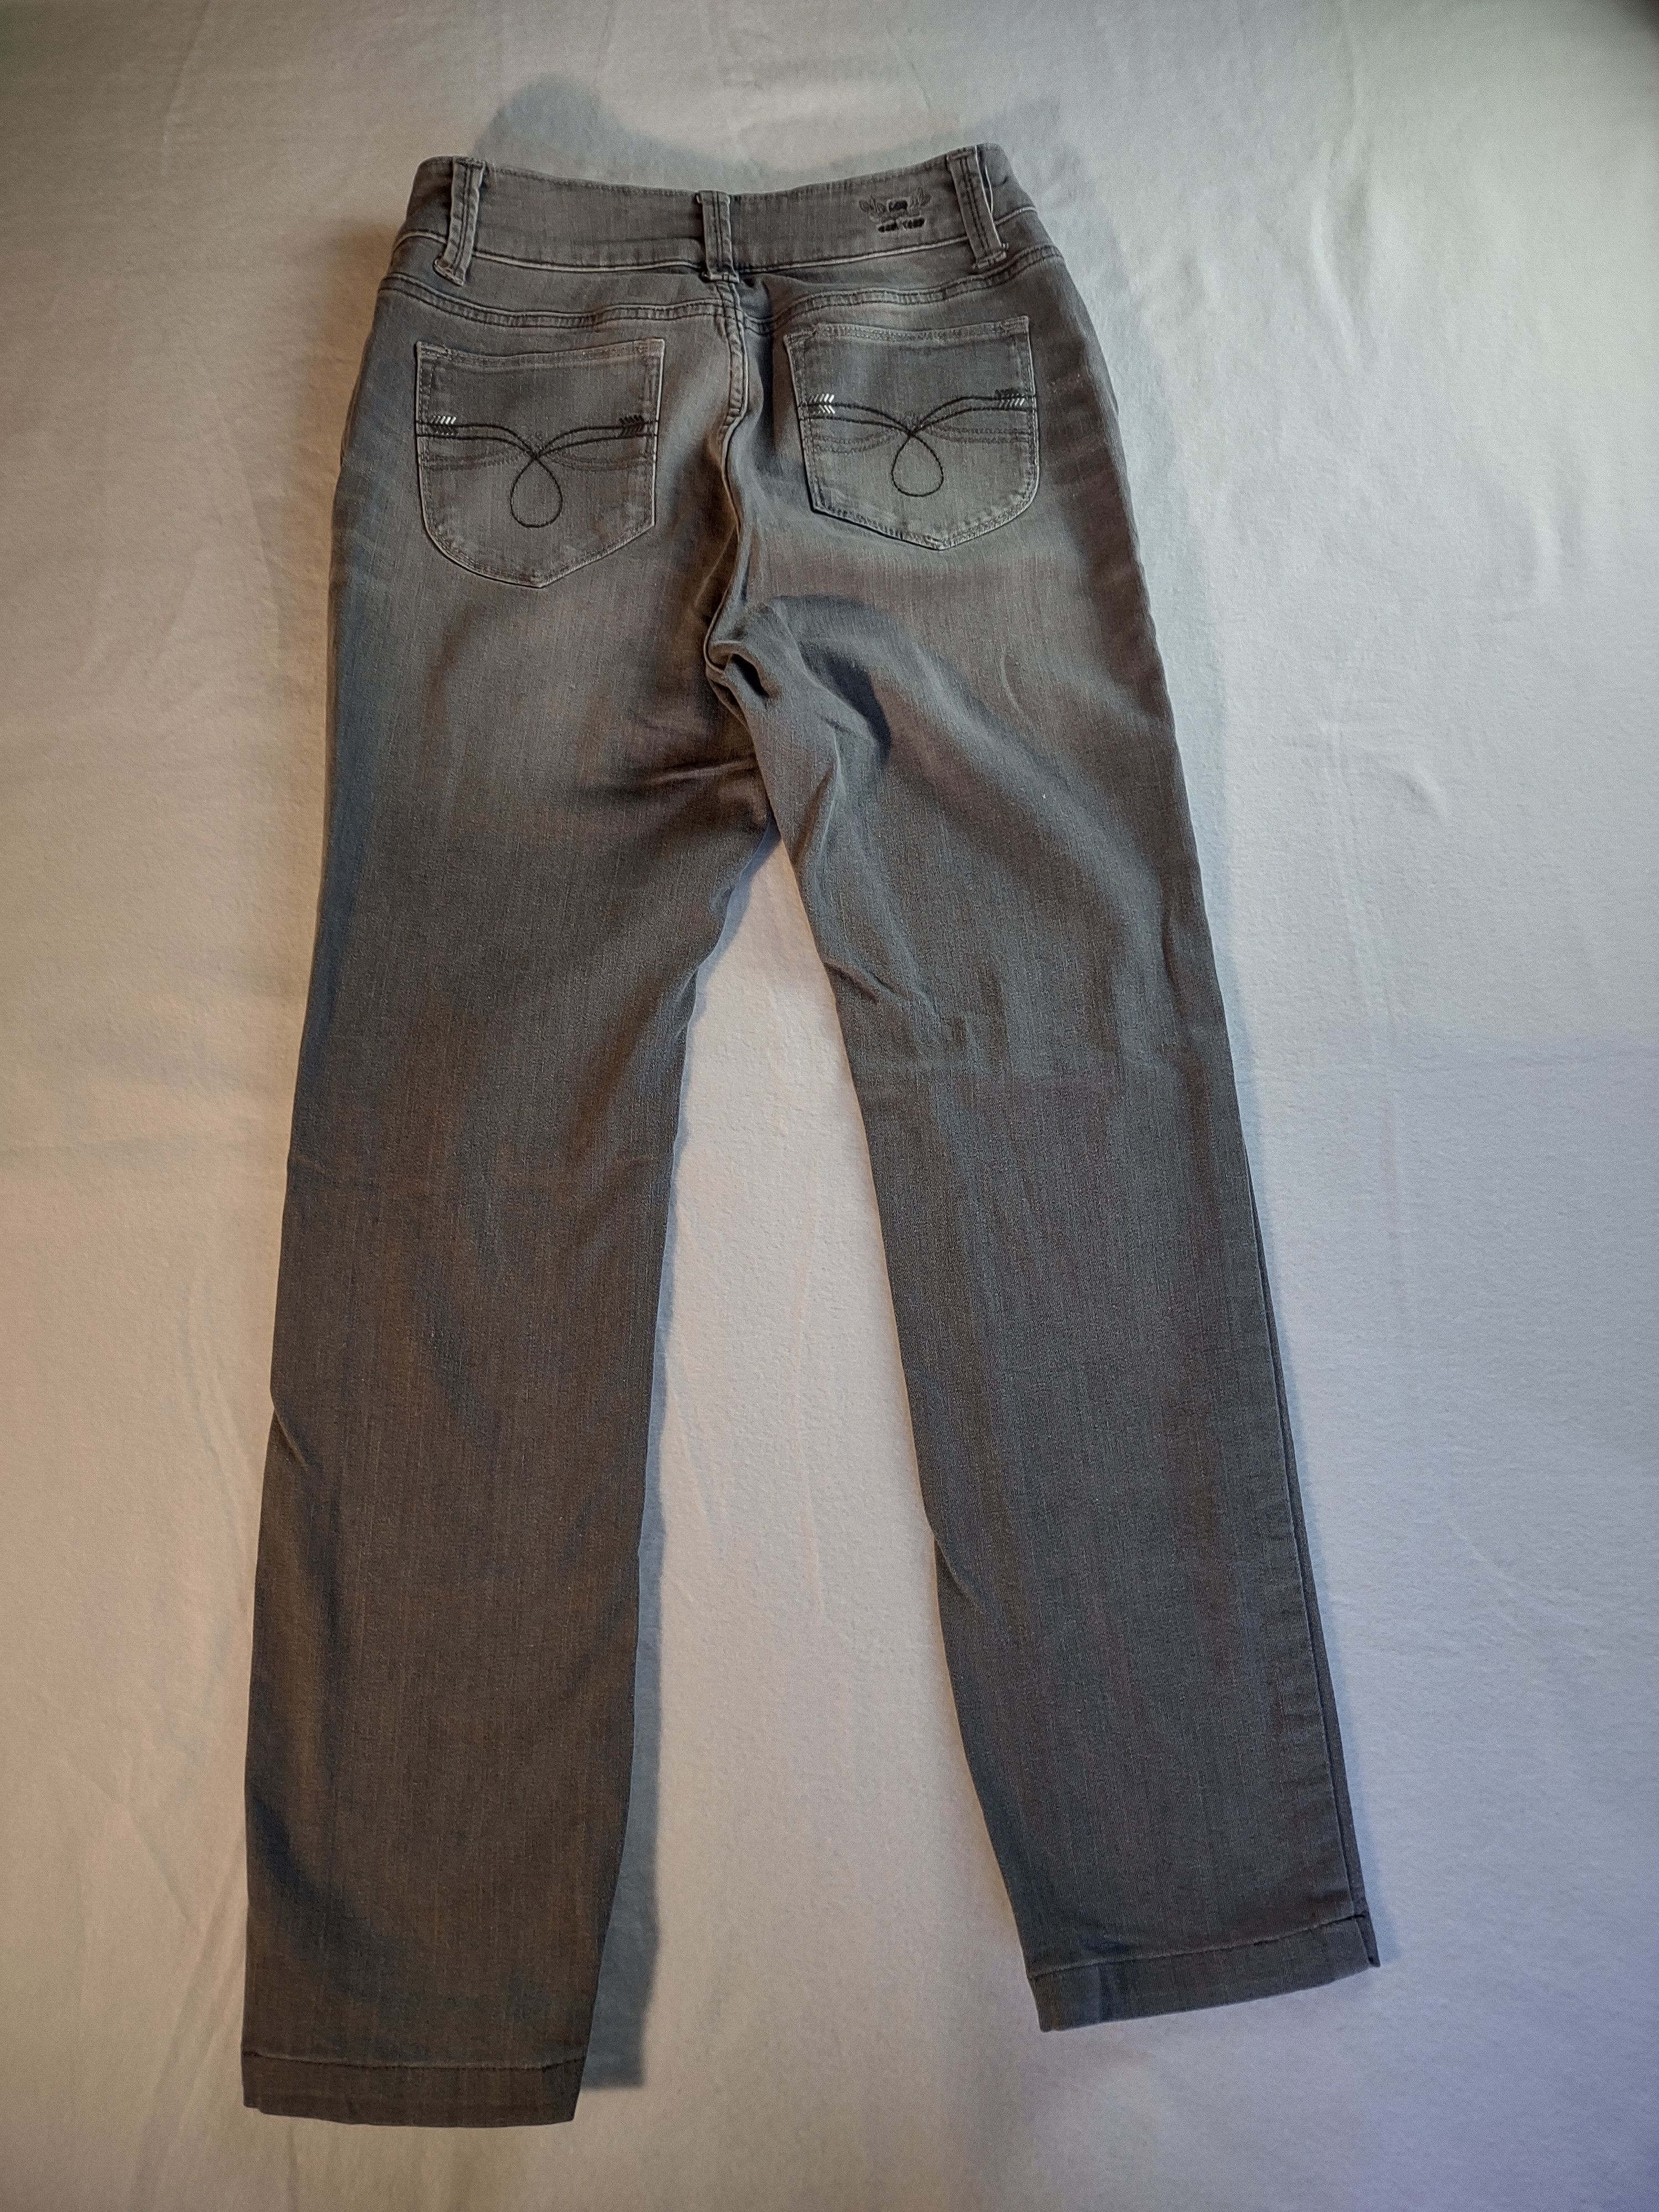 Lee Lee Perfect Fit Just Below Waist denim jeans gray ash wash Size 28" / US 6 / IT 42 - 9 Thumbnail